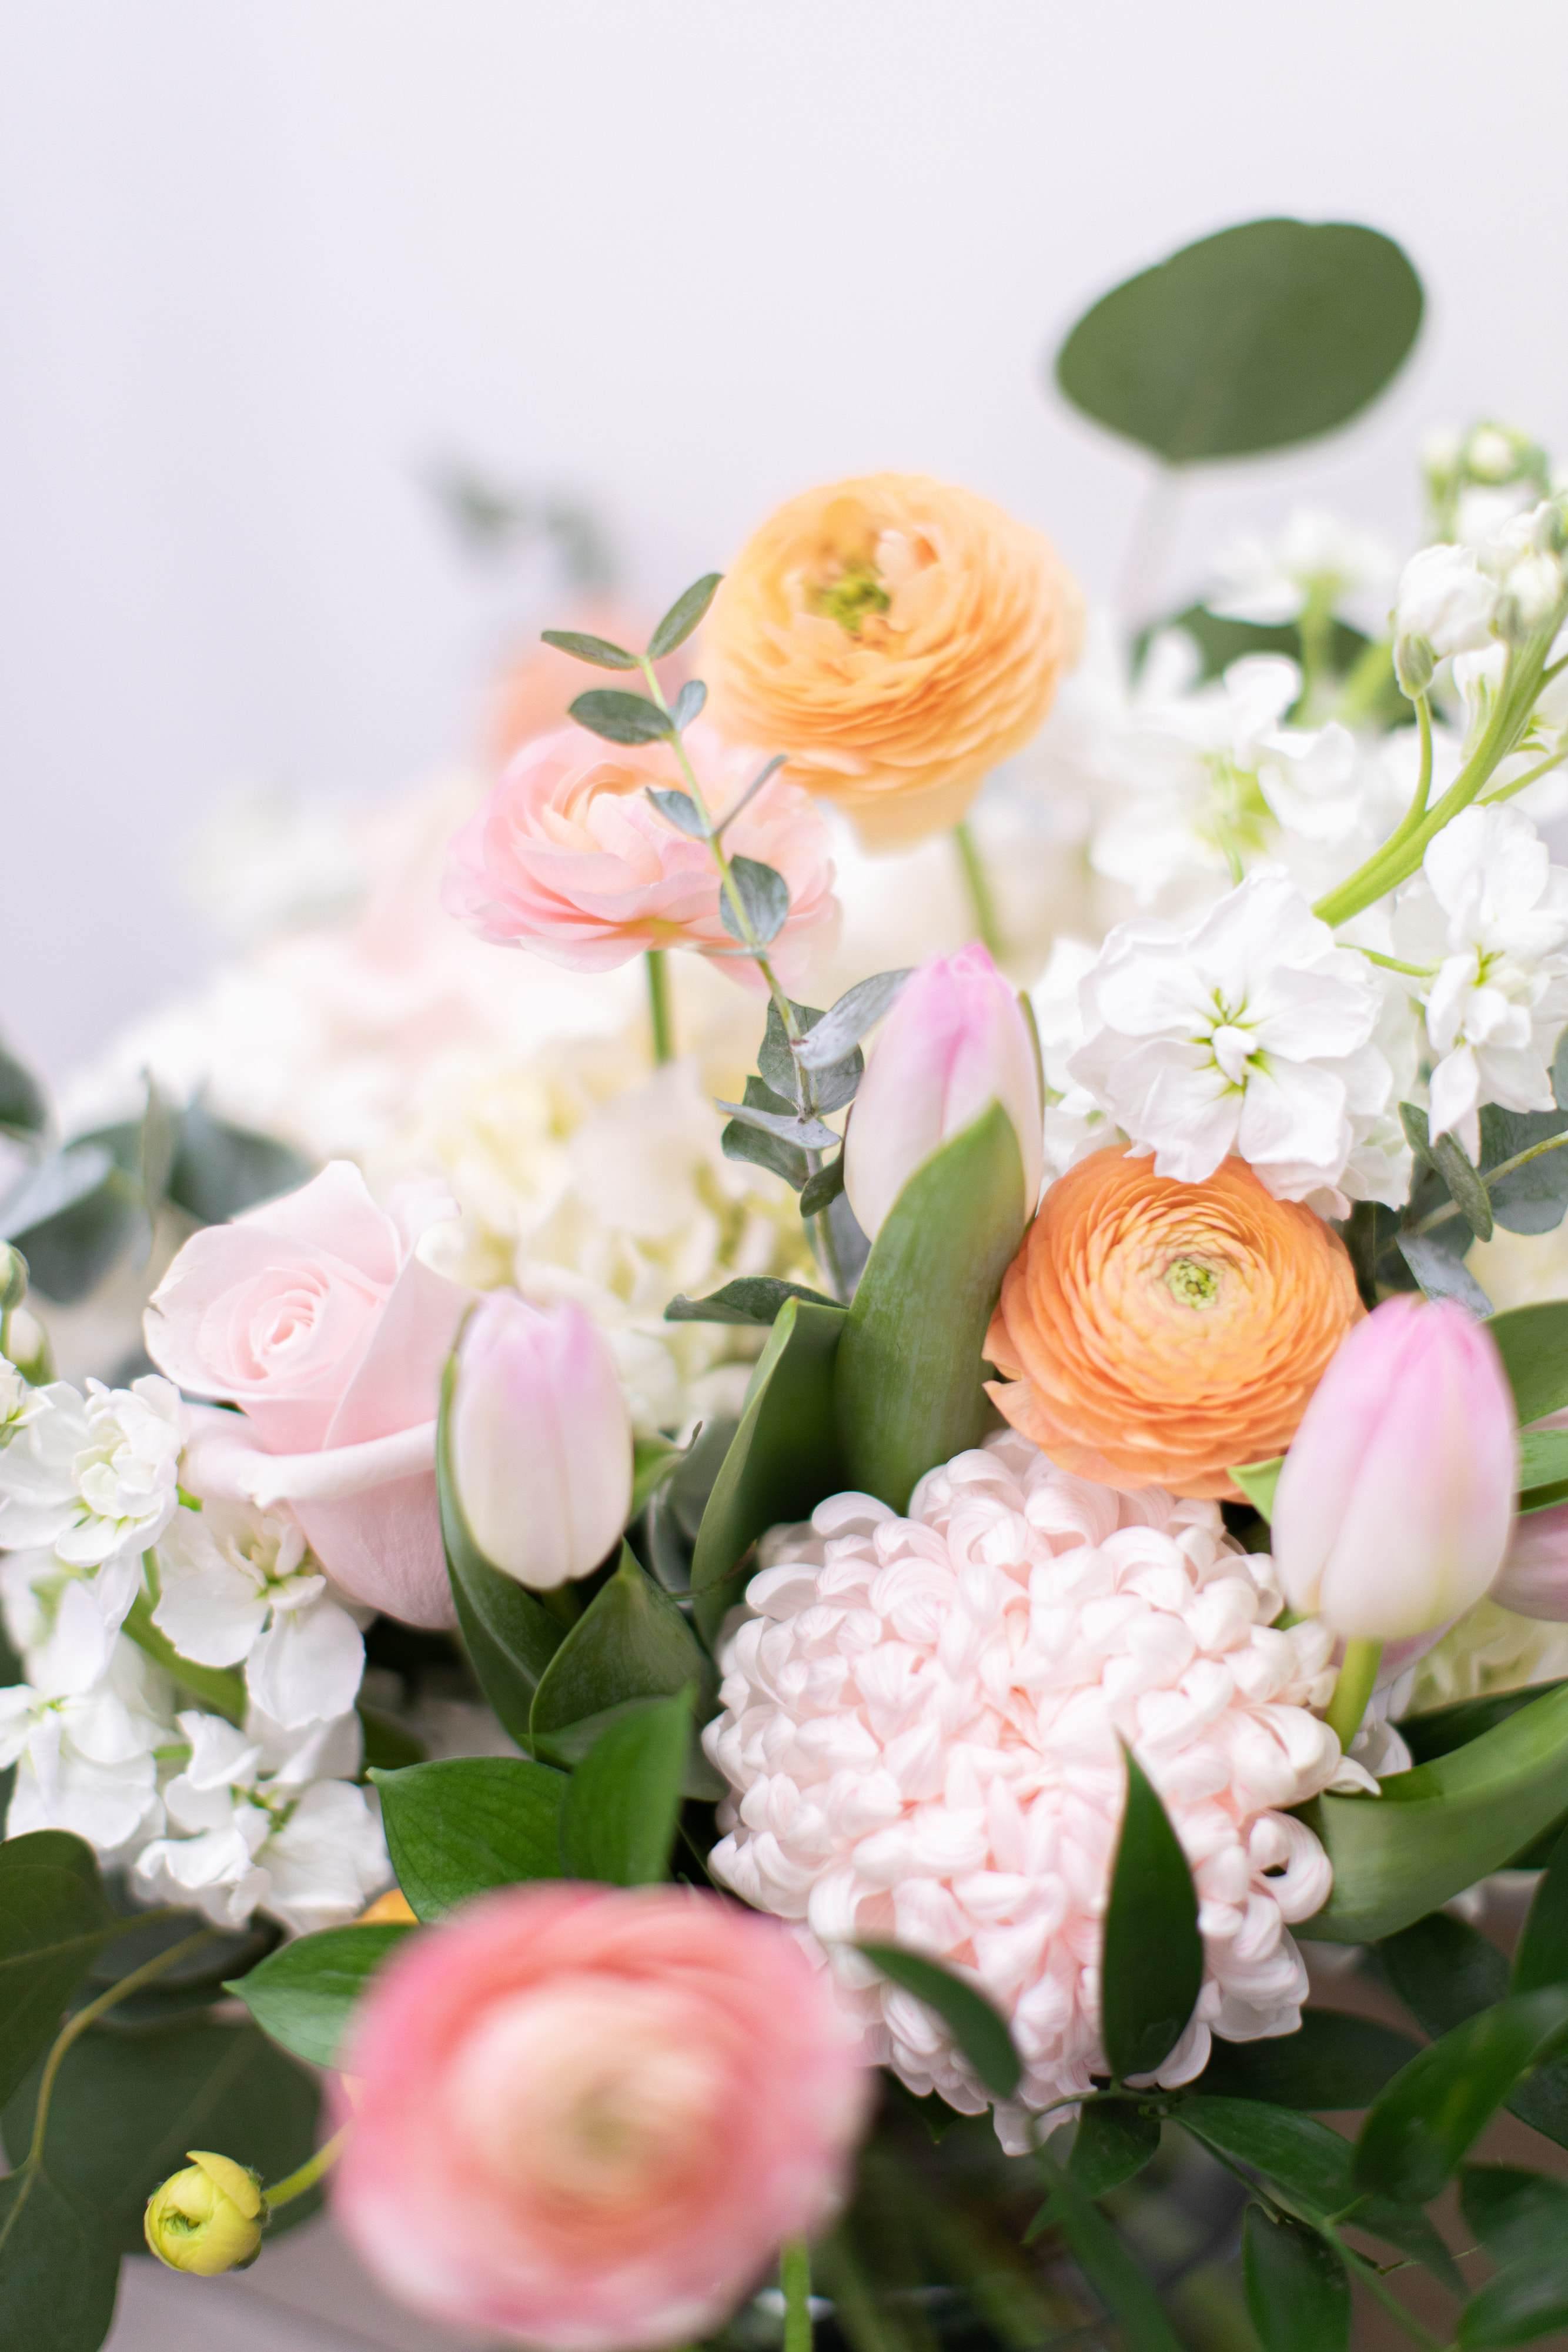 Greeting Bouquet - Toronto Flower Gallery